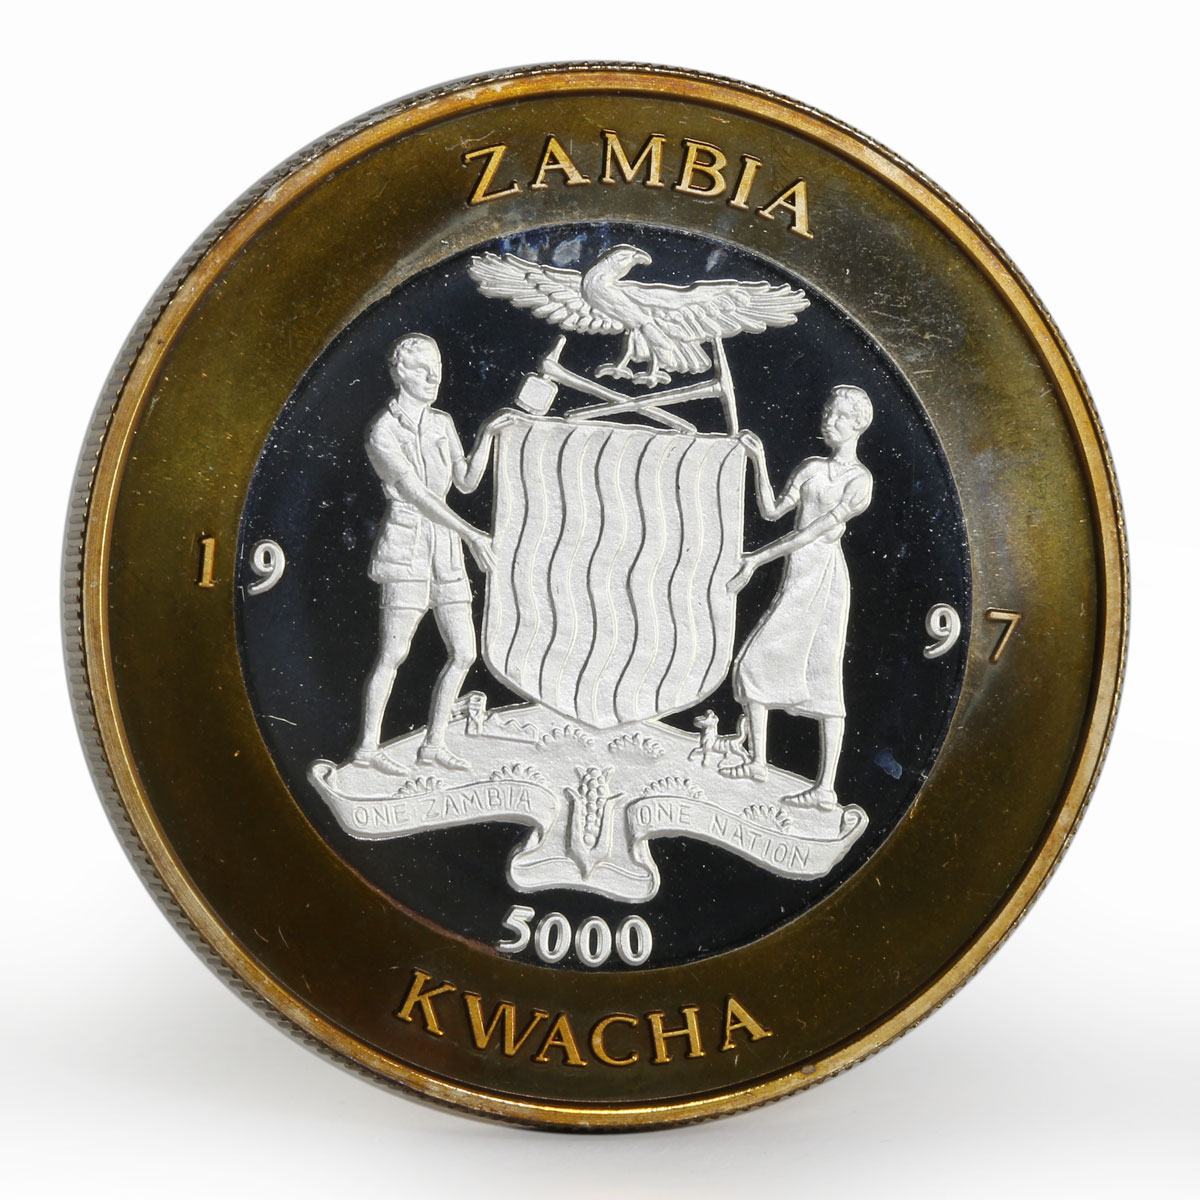 Zambia 5000 kwacha Chinese General Wang Shushengi bimetalic coin 1997